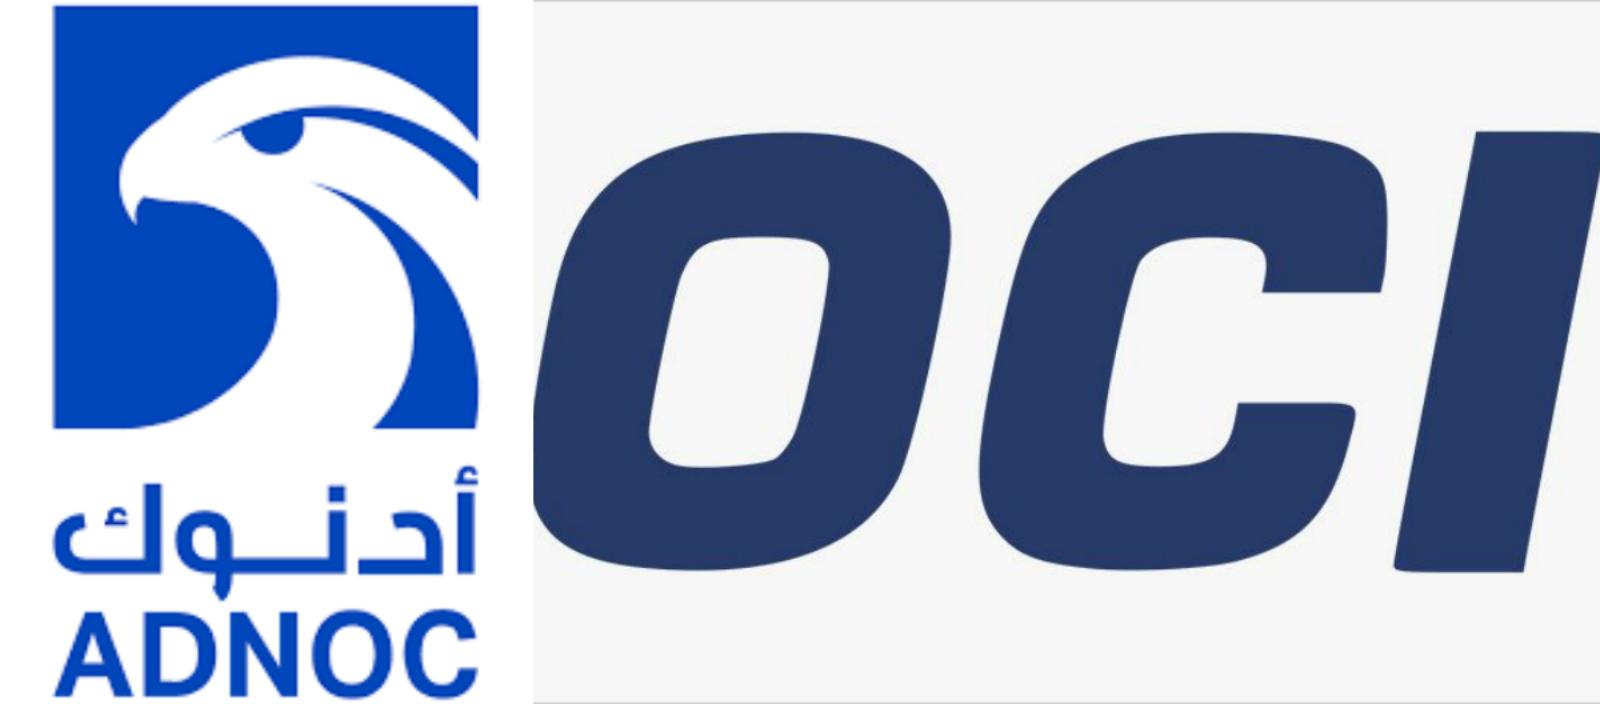 OCI Logo - OCI NV, ADNOC create JV combining their Middle East Fertilizers ...